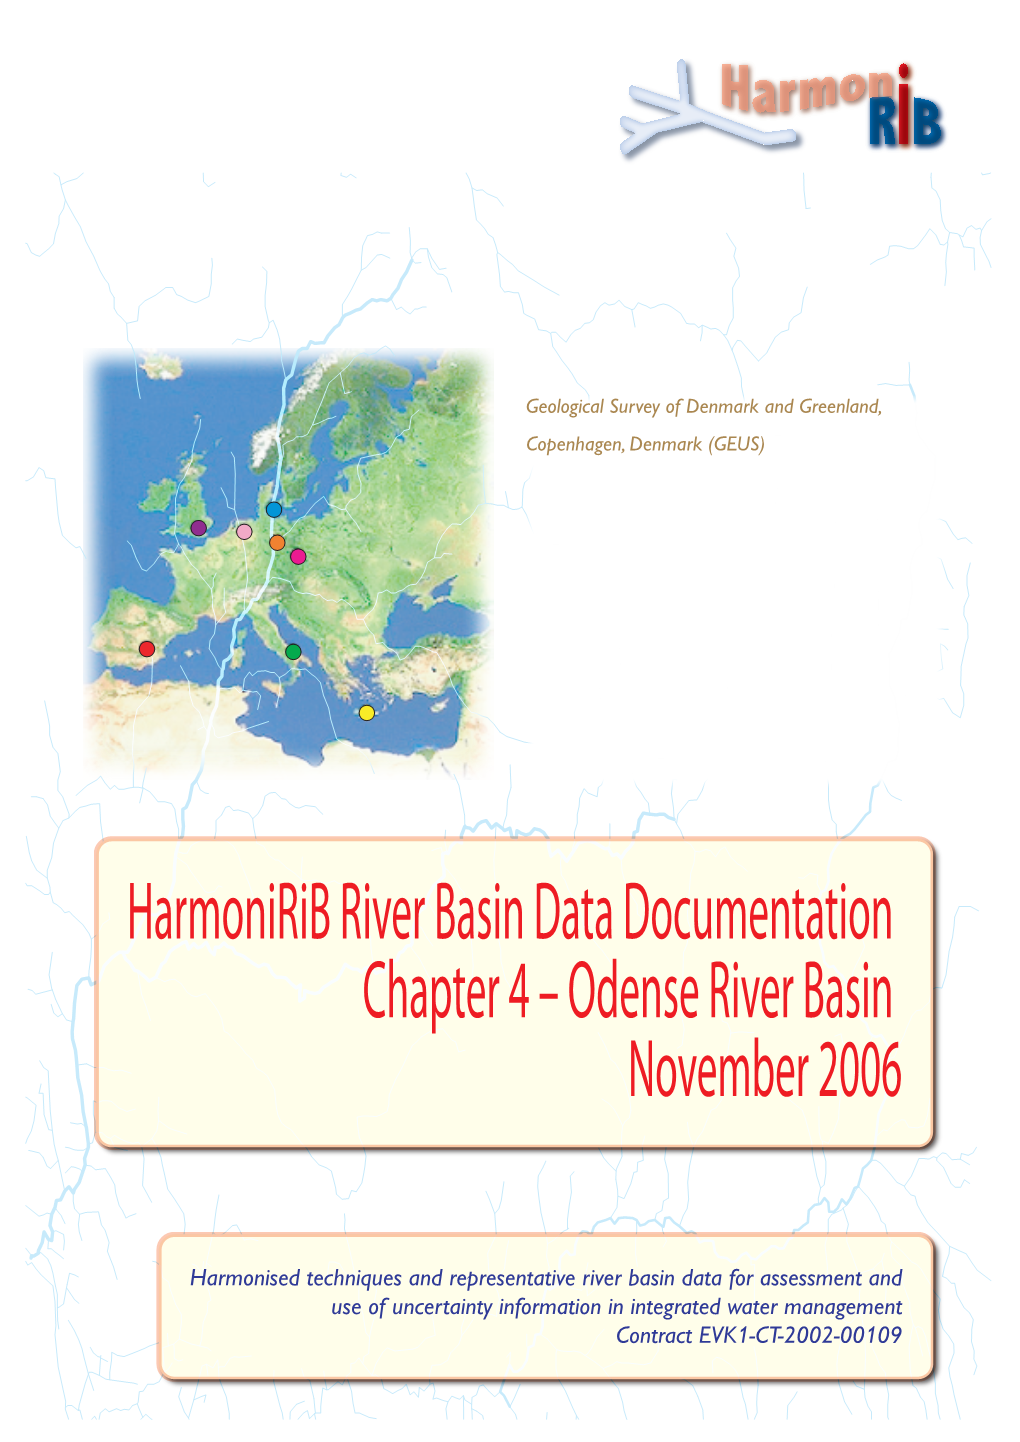 Harmonirib River Basin Data Documentation Chapter 4 – Odense River Basin November 2006